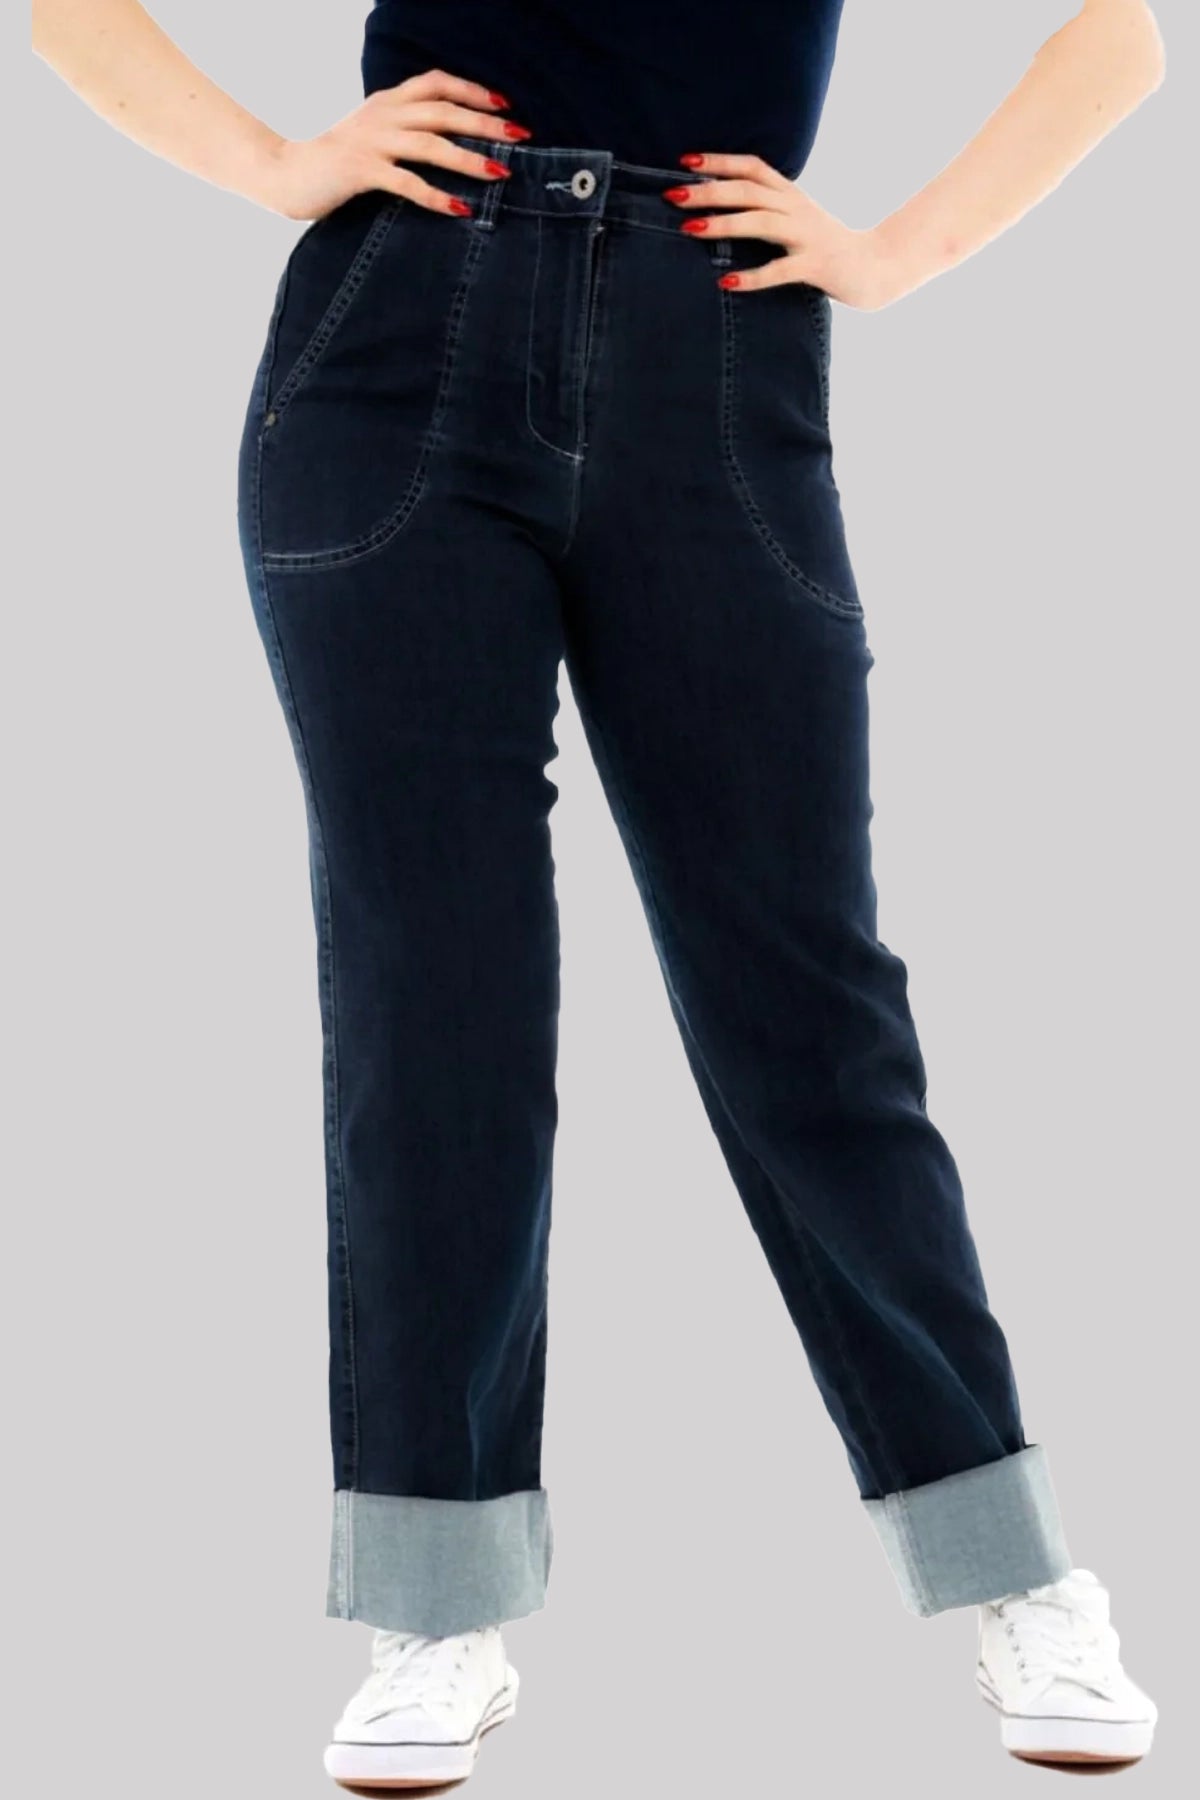 Ro Rox Thelma Retro Vintage Style 1950'S Denim Jeans, Navy Blue